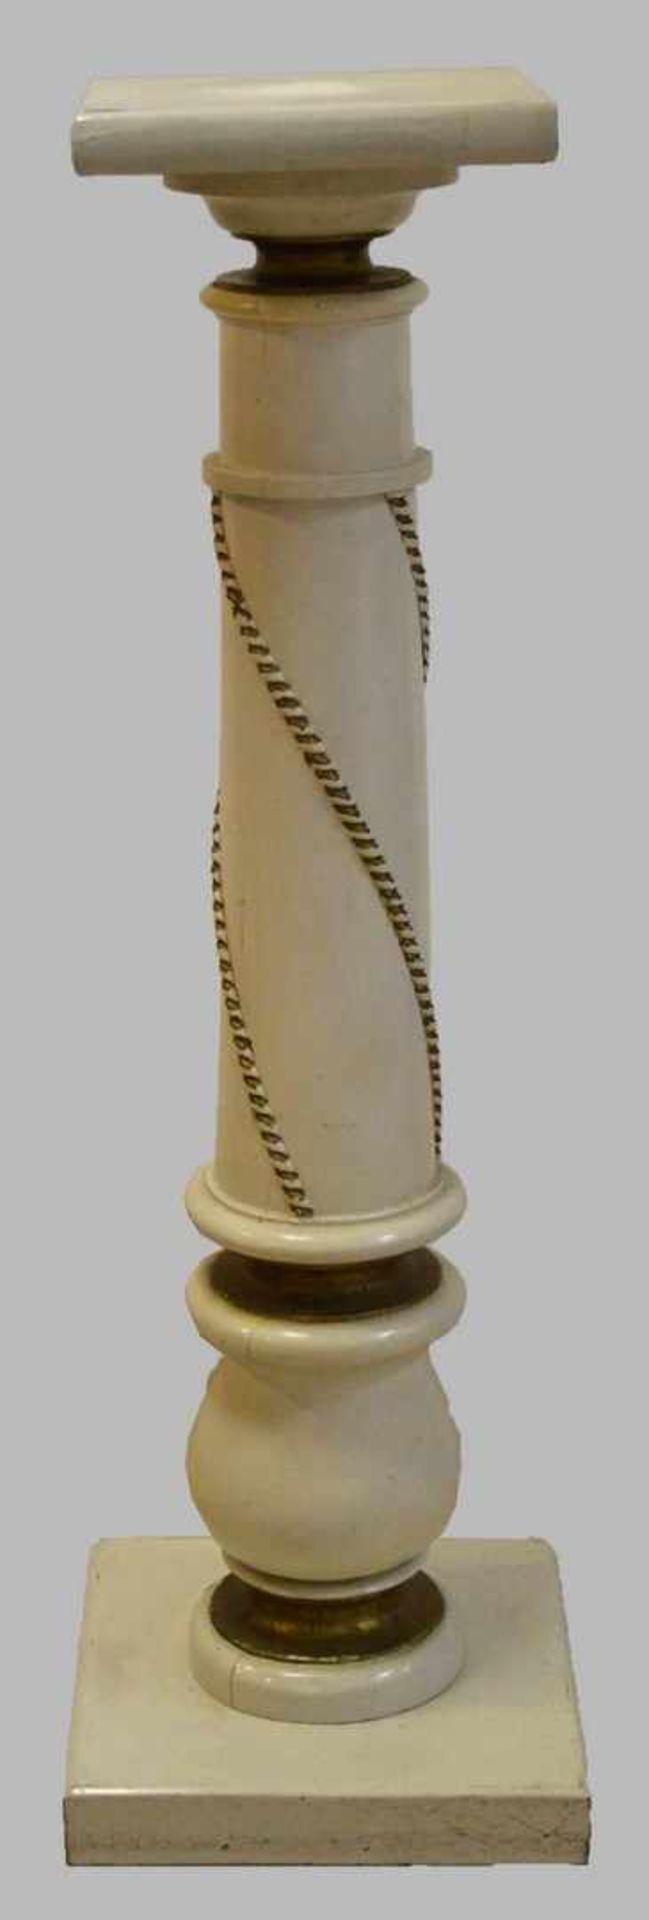 Blumensäule Hartholz, weiß/gold gefasst, rechteckiger Sockel, runde Säule, H 88 cm, um 1880